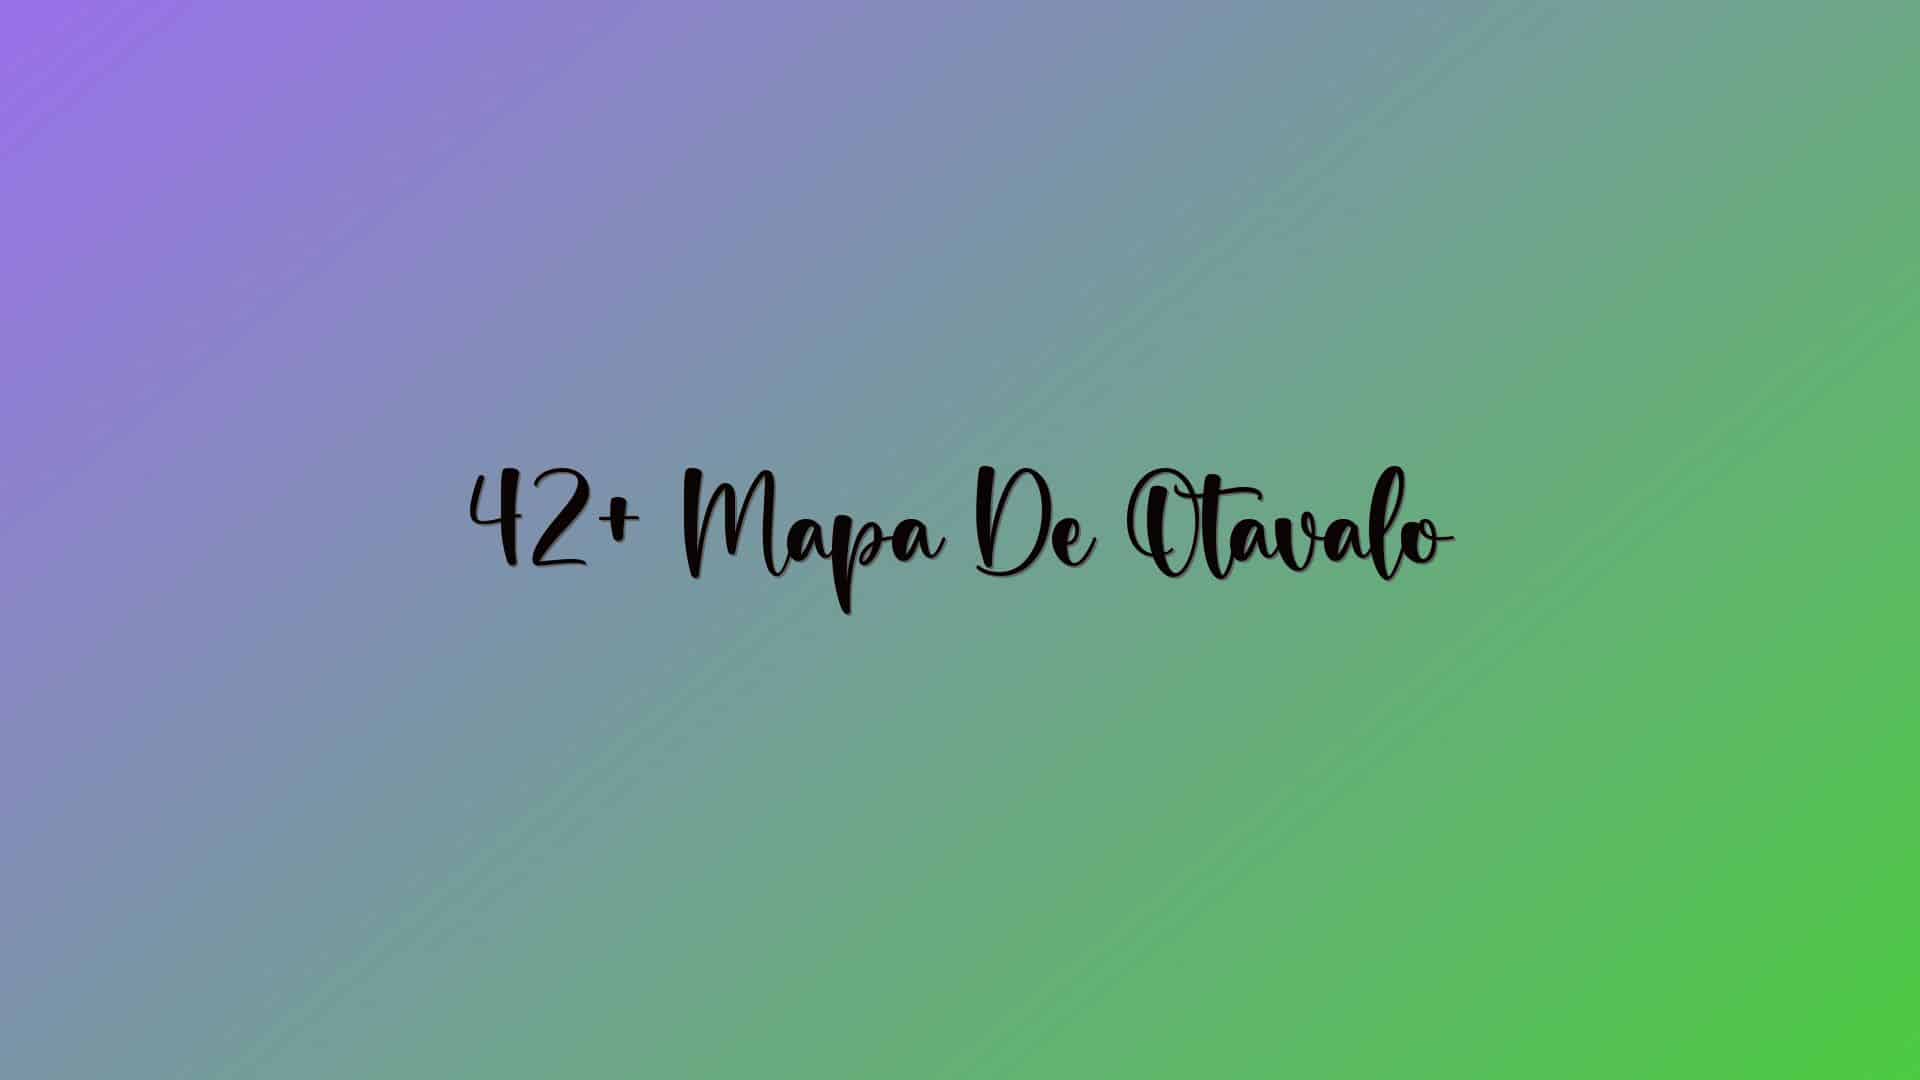 42+ Mapa De Otavalo